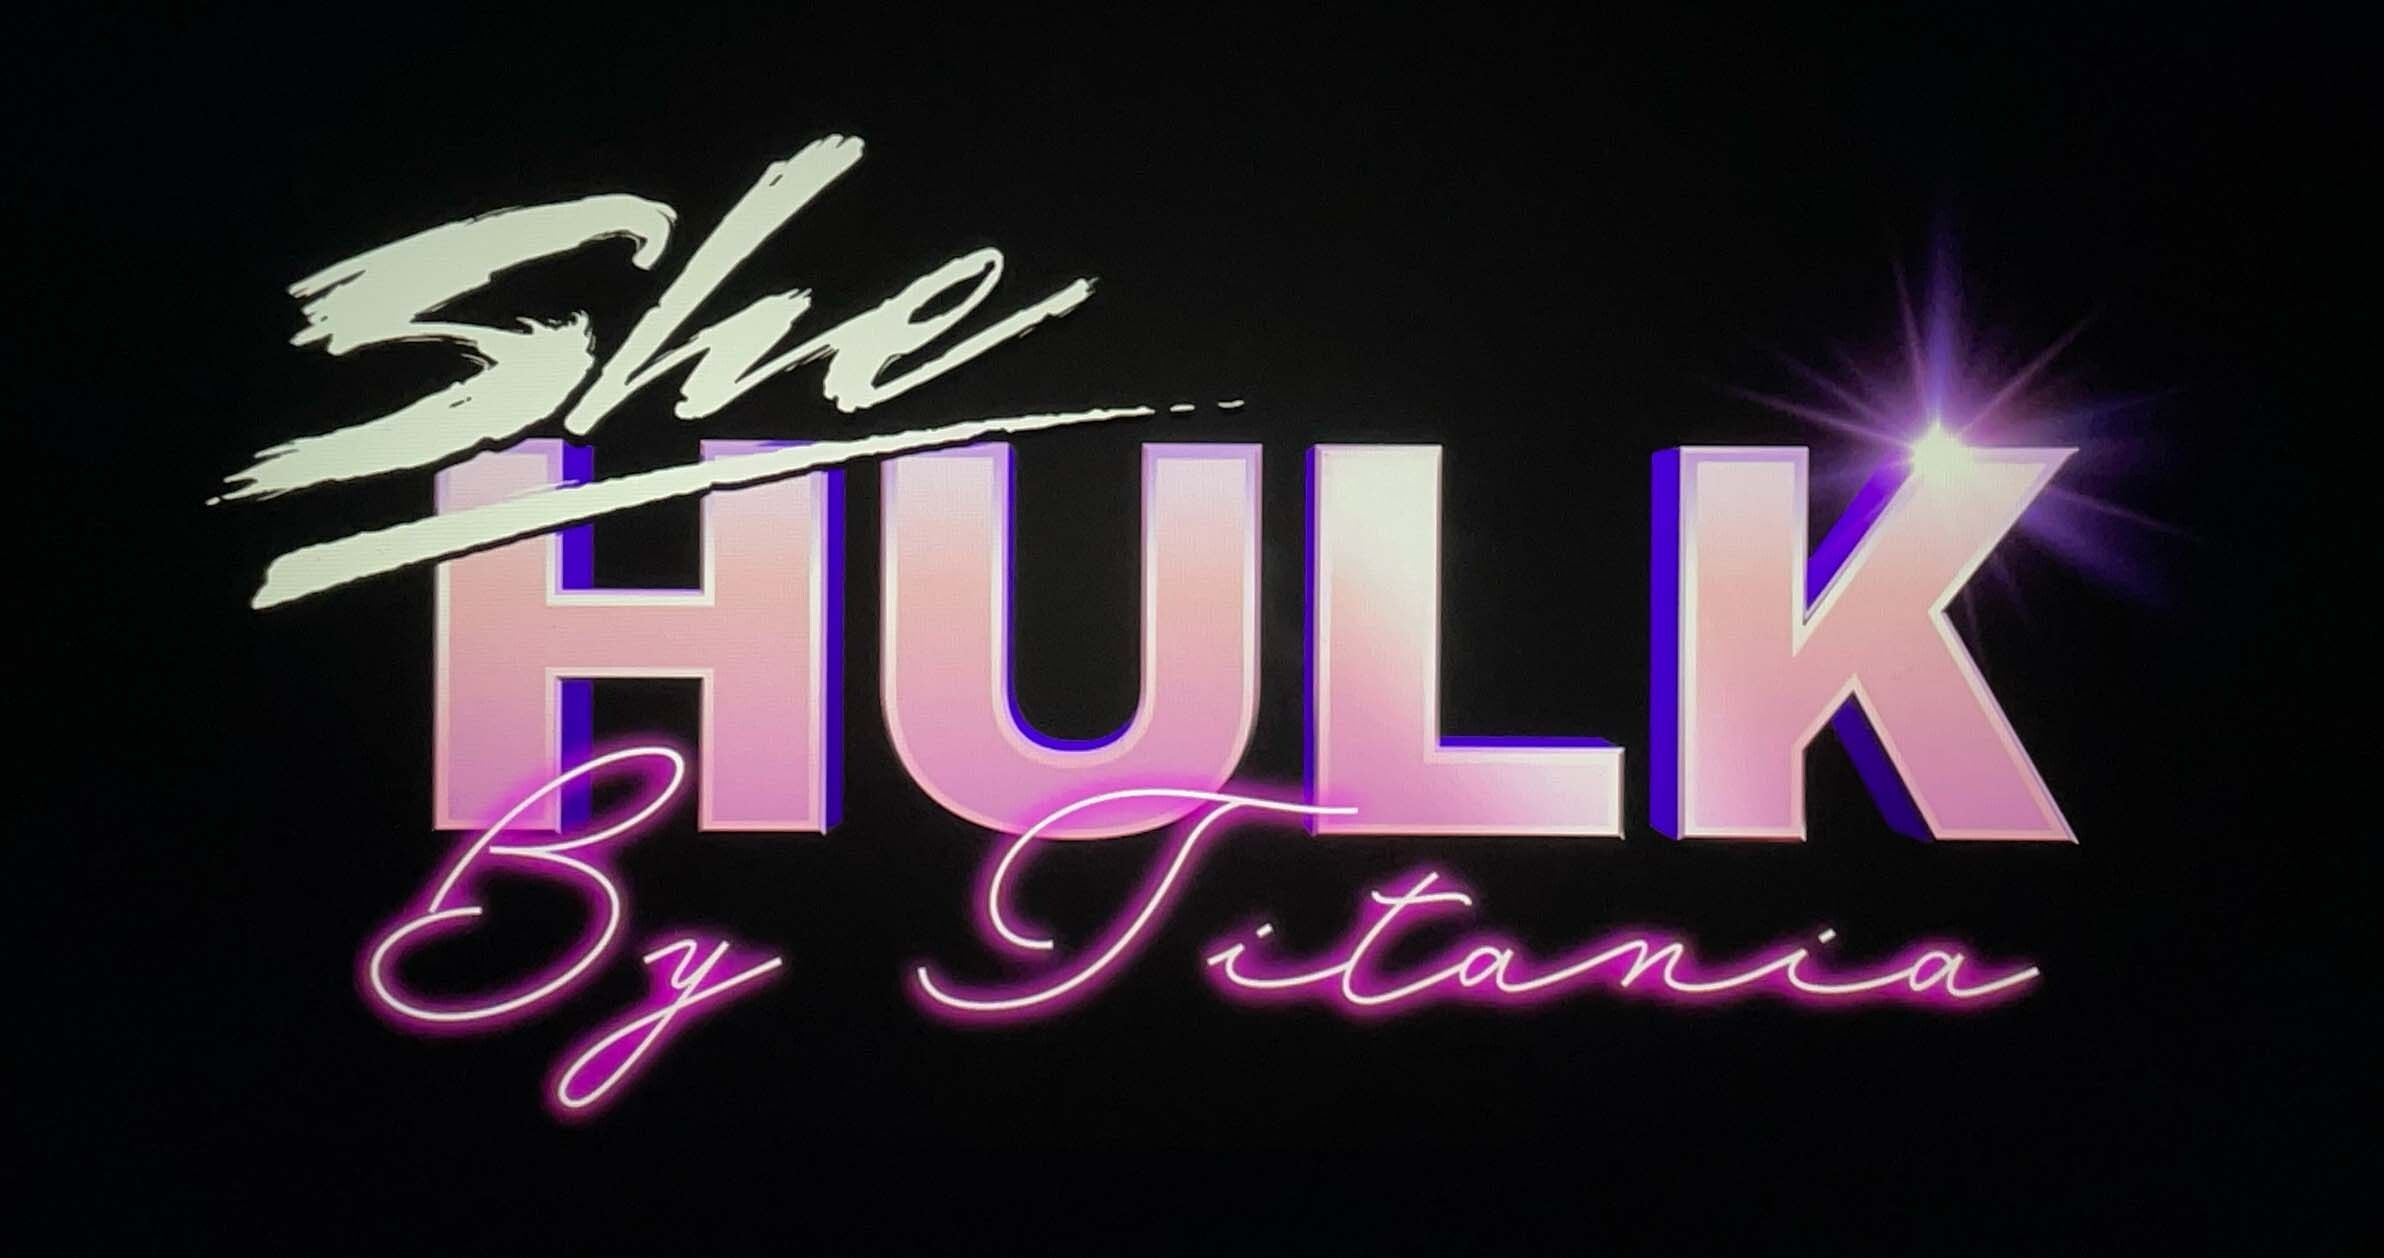 she hulk by titania logo